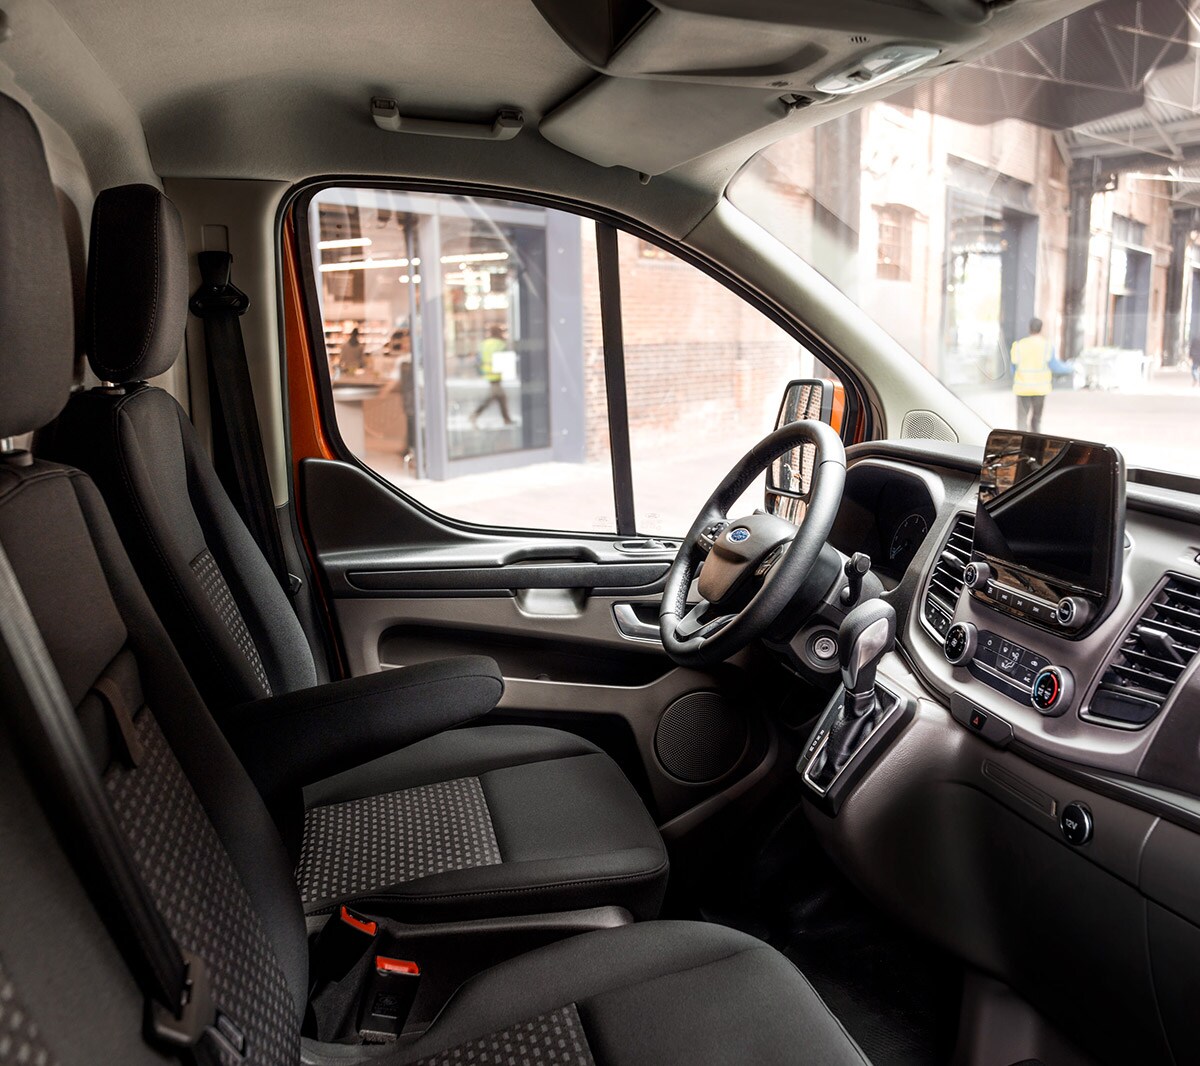 Transit Custom Van interior with seats and steering wheel